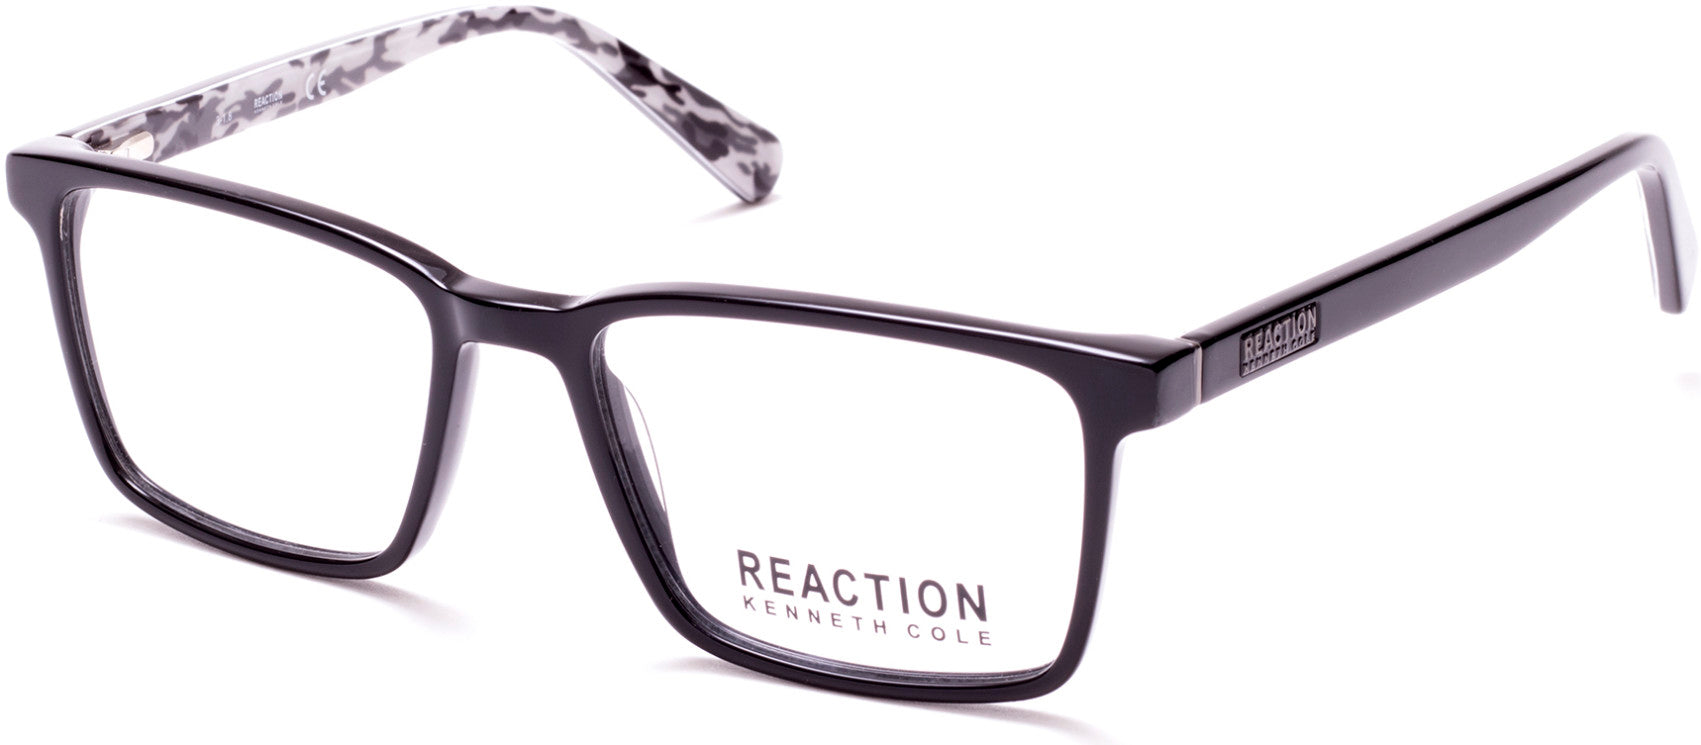 Kenneth Cole New York,Kenneth Cole Reaction KC0805 Geometric Eyeglasses 001-001 - Shiny Black